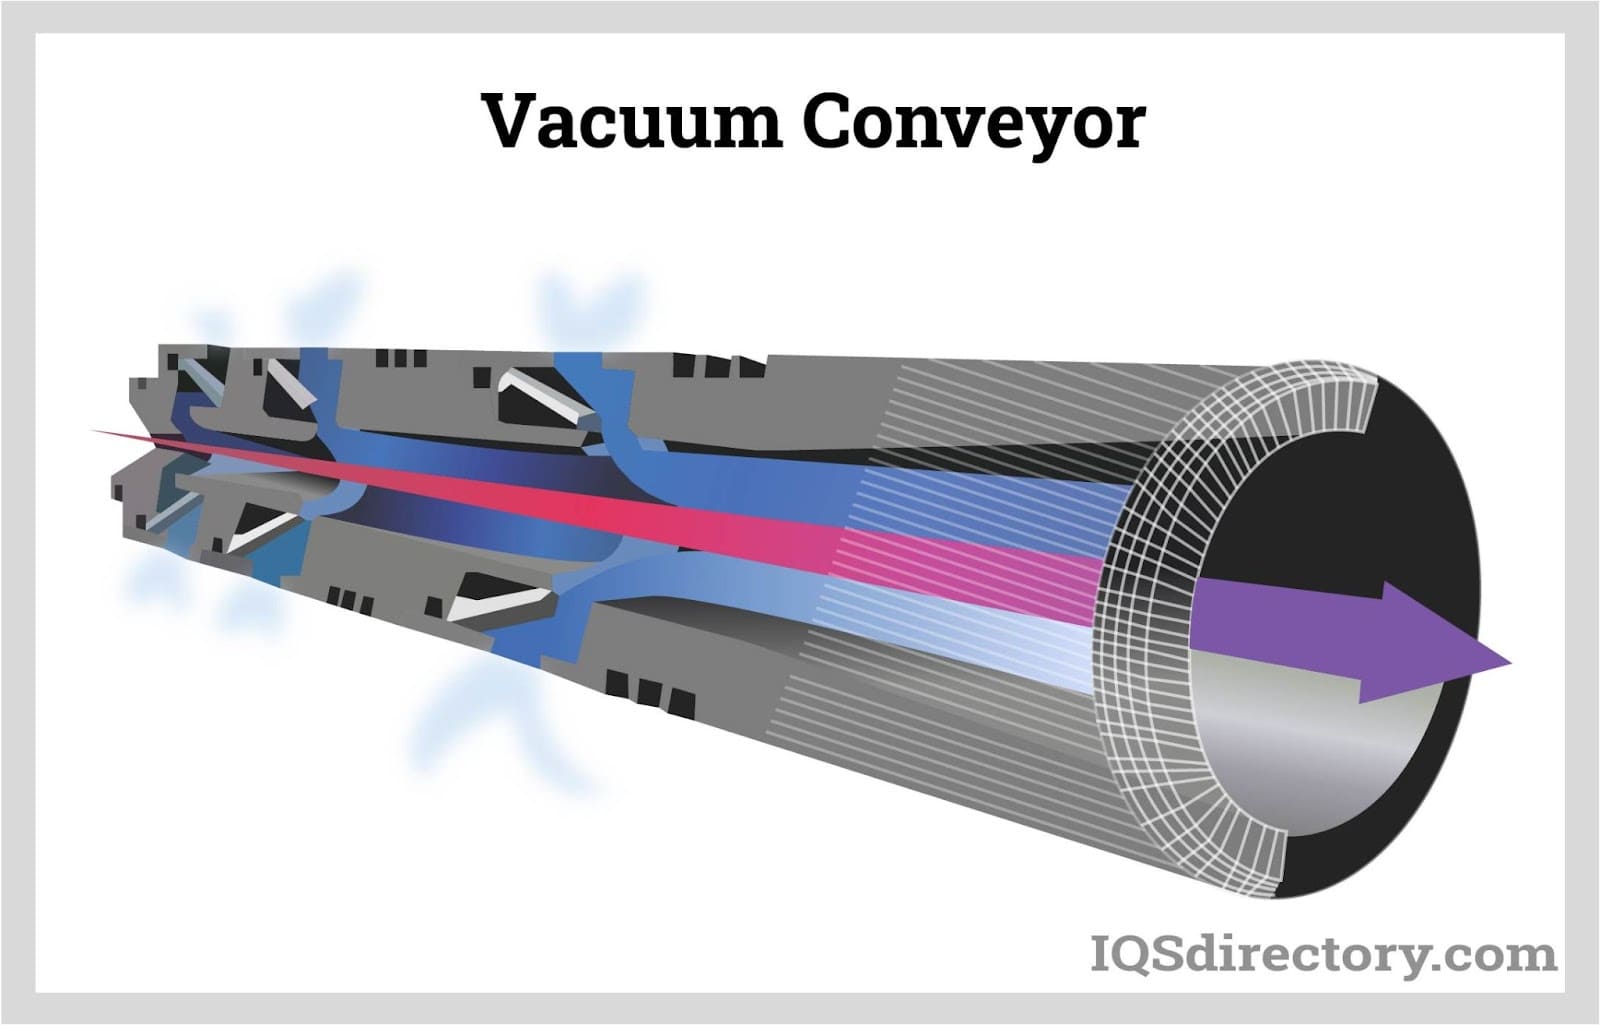 Vacuum Conveyors